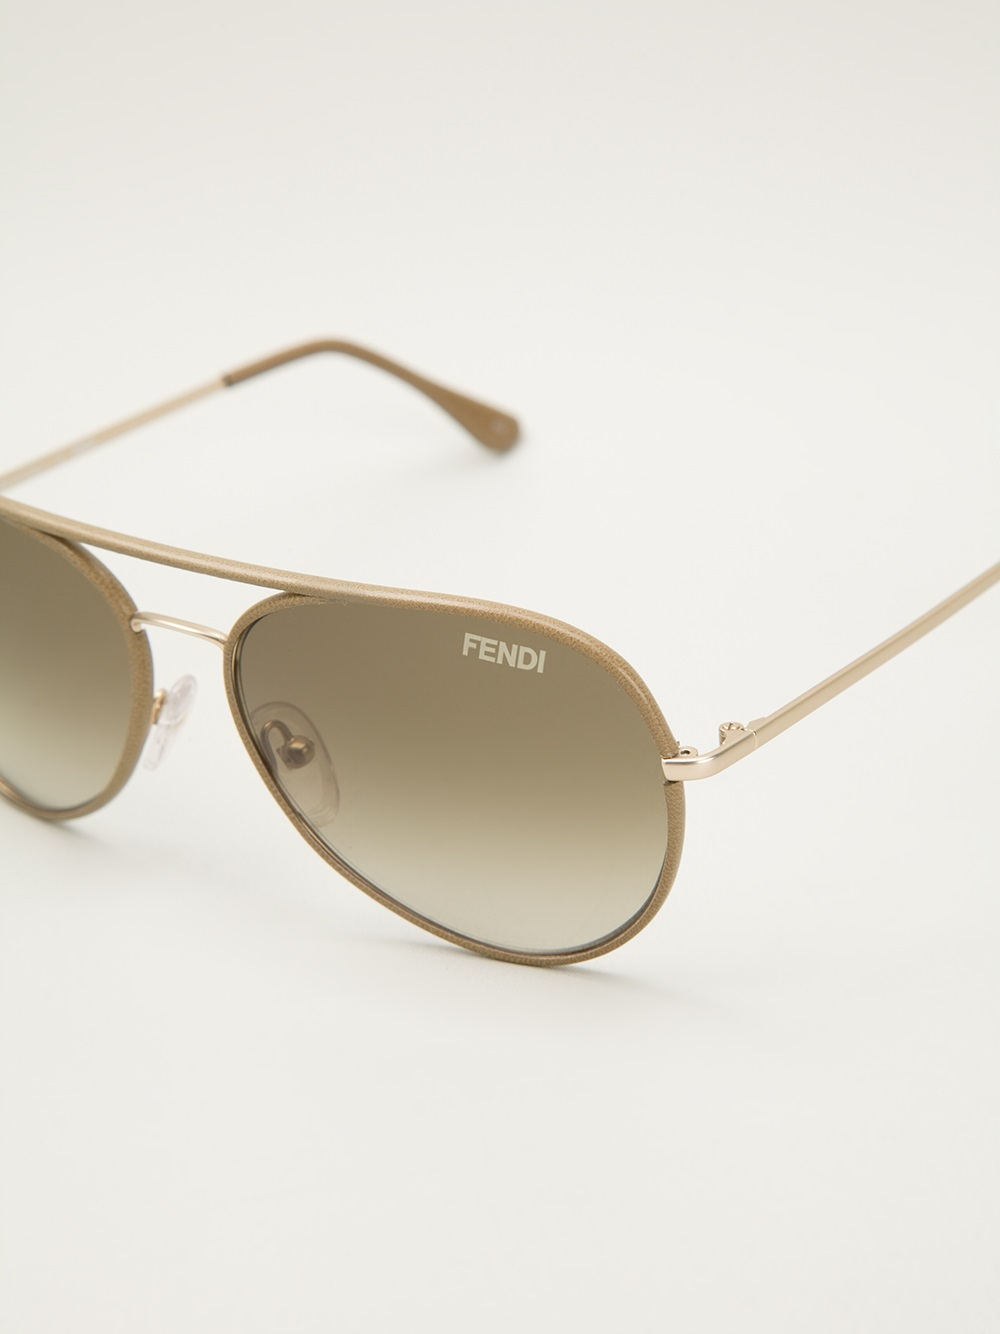 Fendi Aviator Sunglasses in Natural for Men